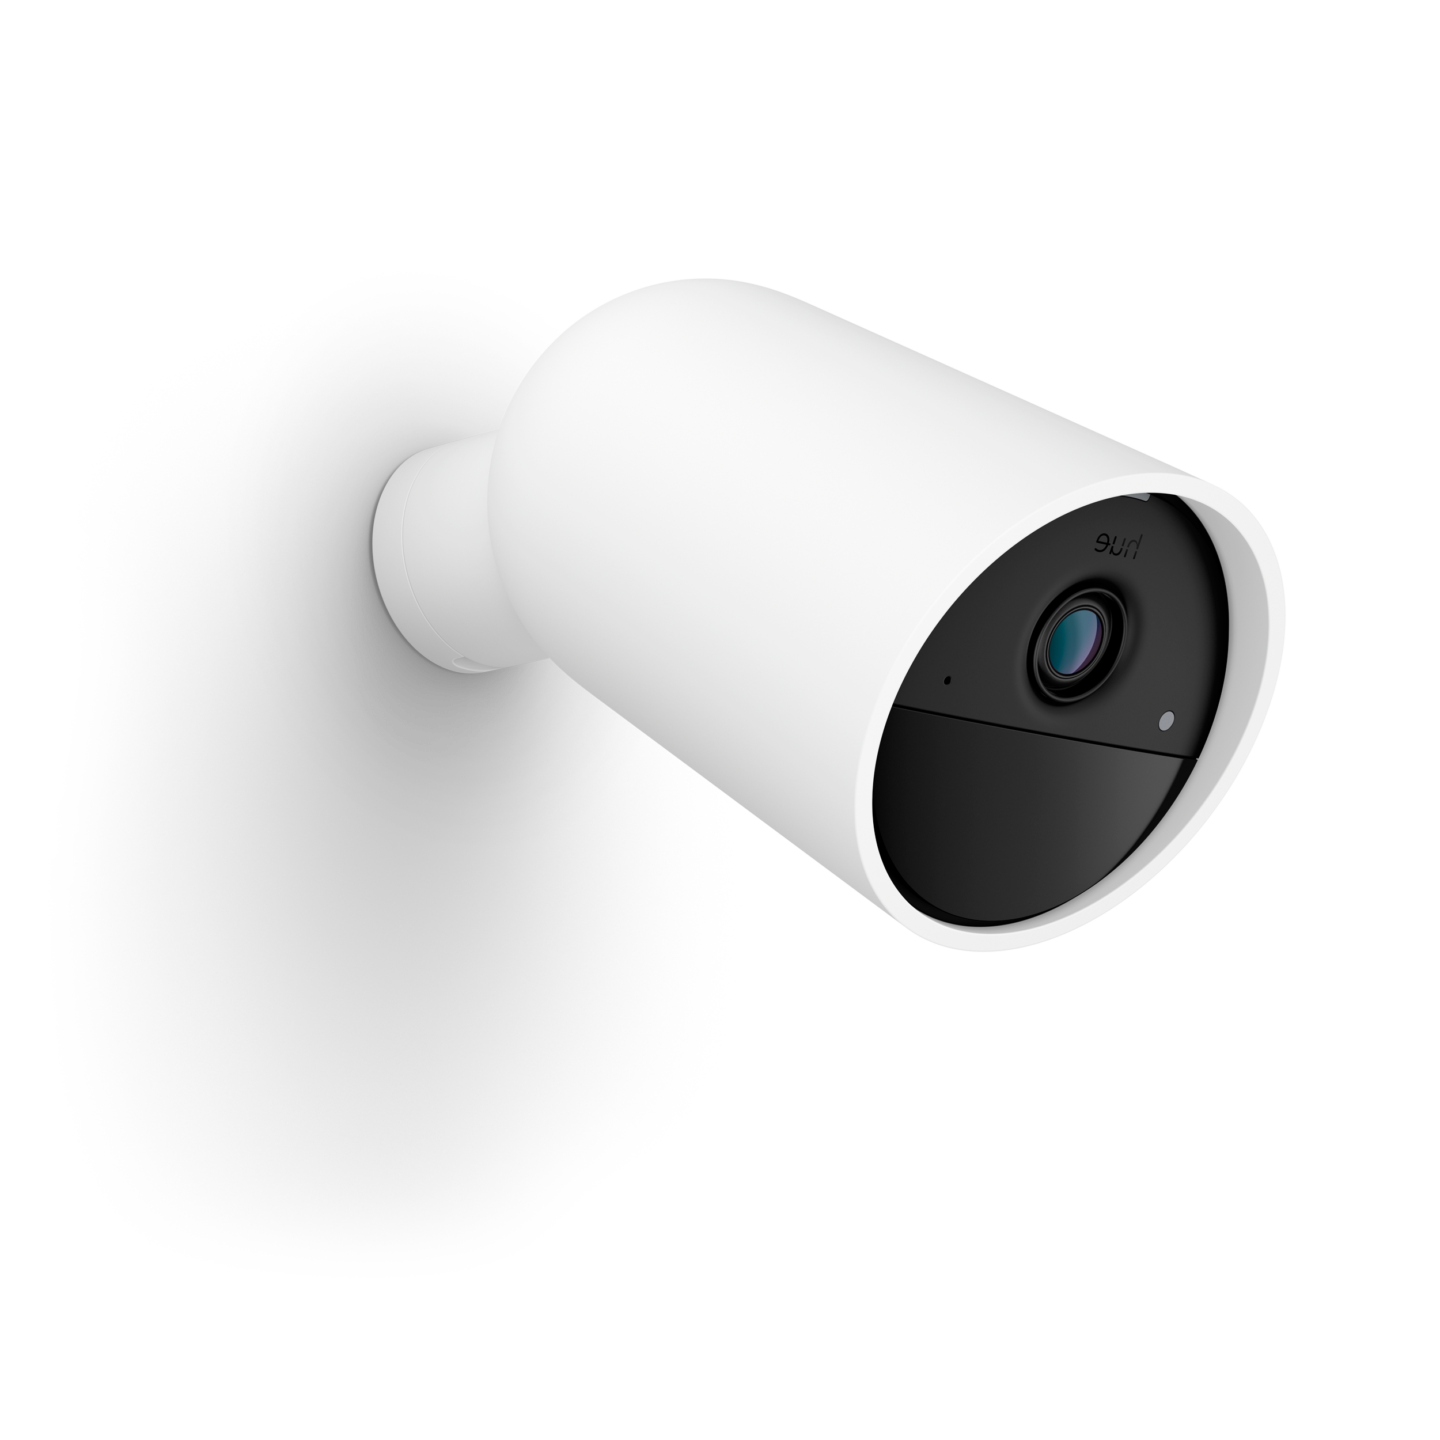 Philips Hue secure draadloze beveiligingscamera